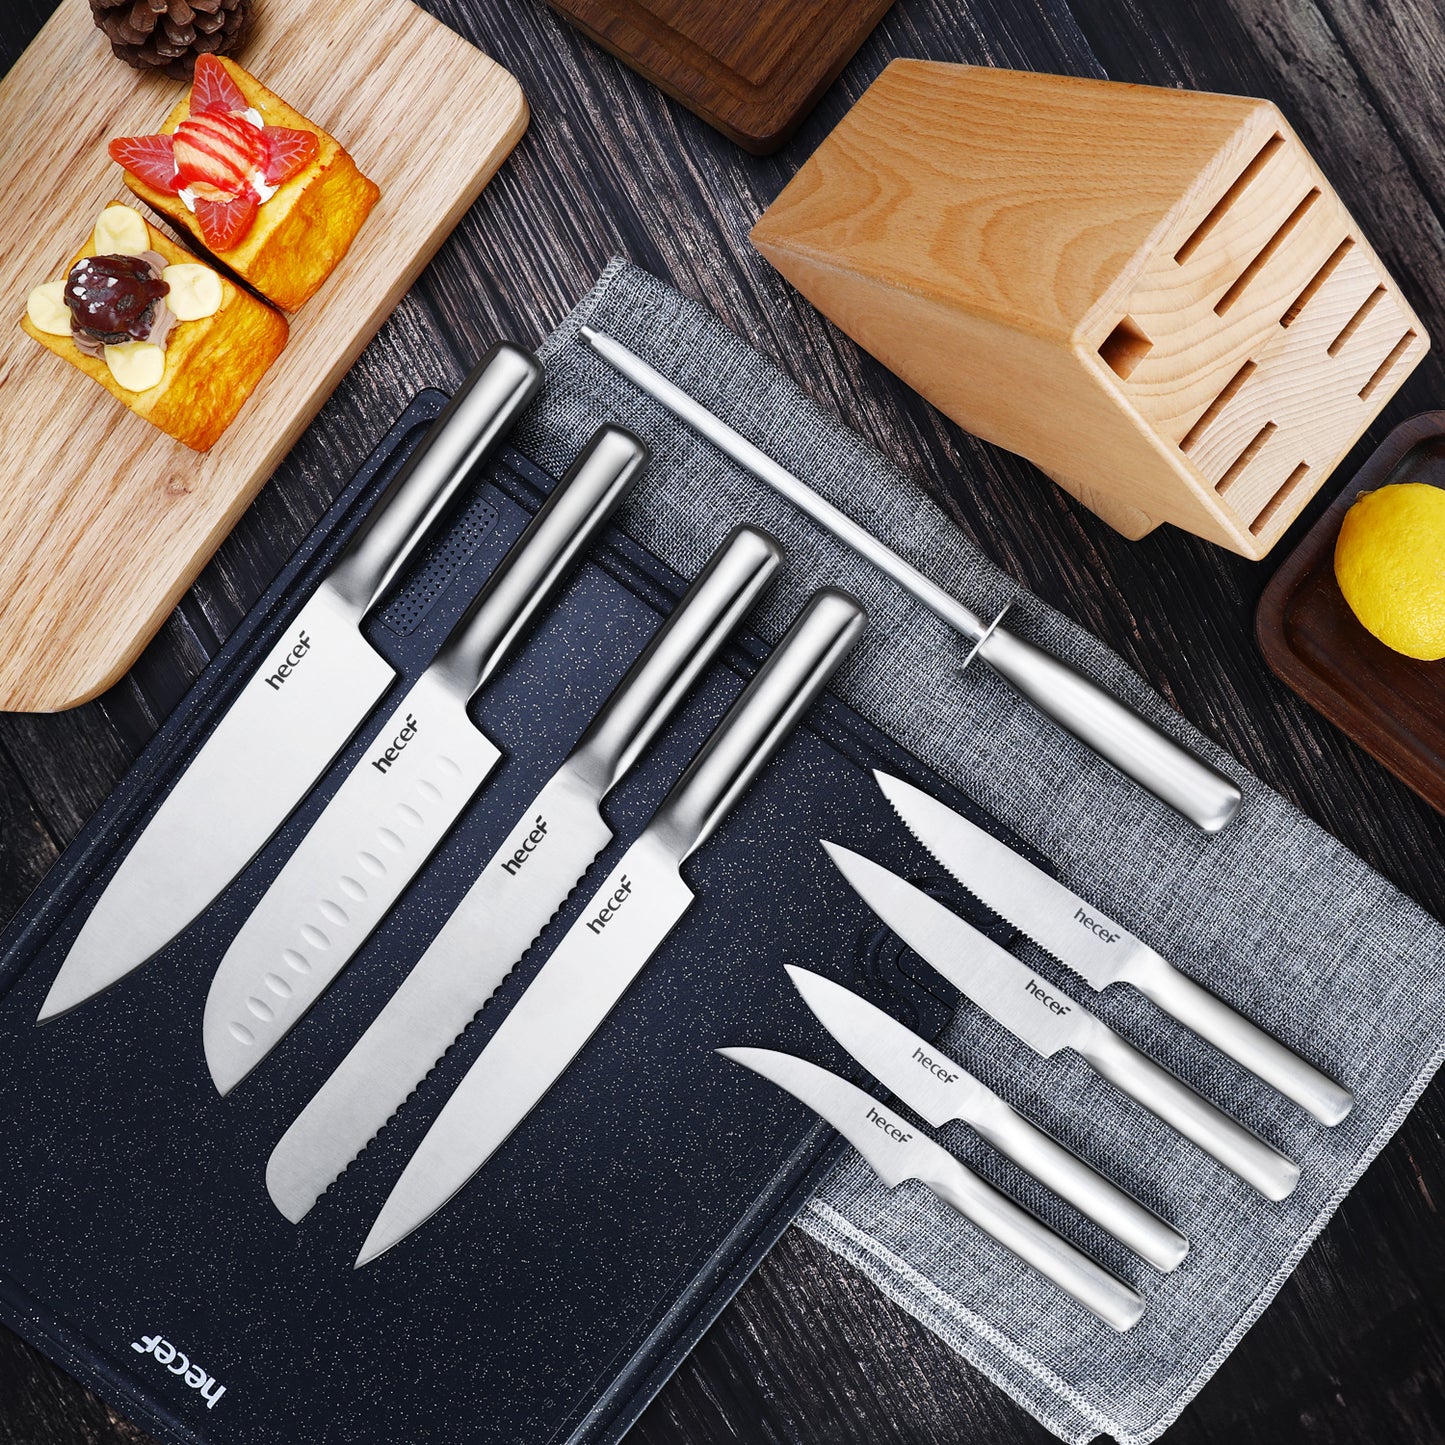 hecef Block Knife Set, 10 Piece Kitchen Knife Set with Wooden Block & Sharpening Bar, Stainless Steel Chef Knife Set with Steak Knives - Hecef Kitchen